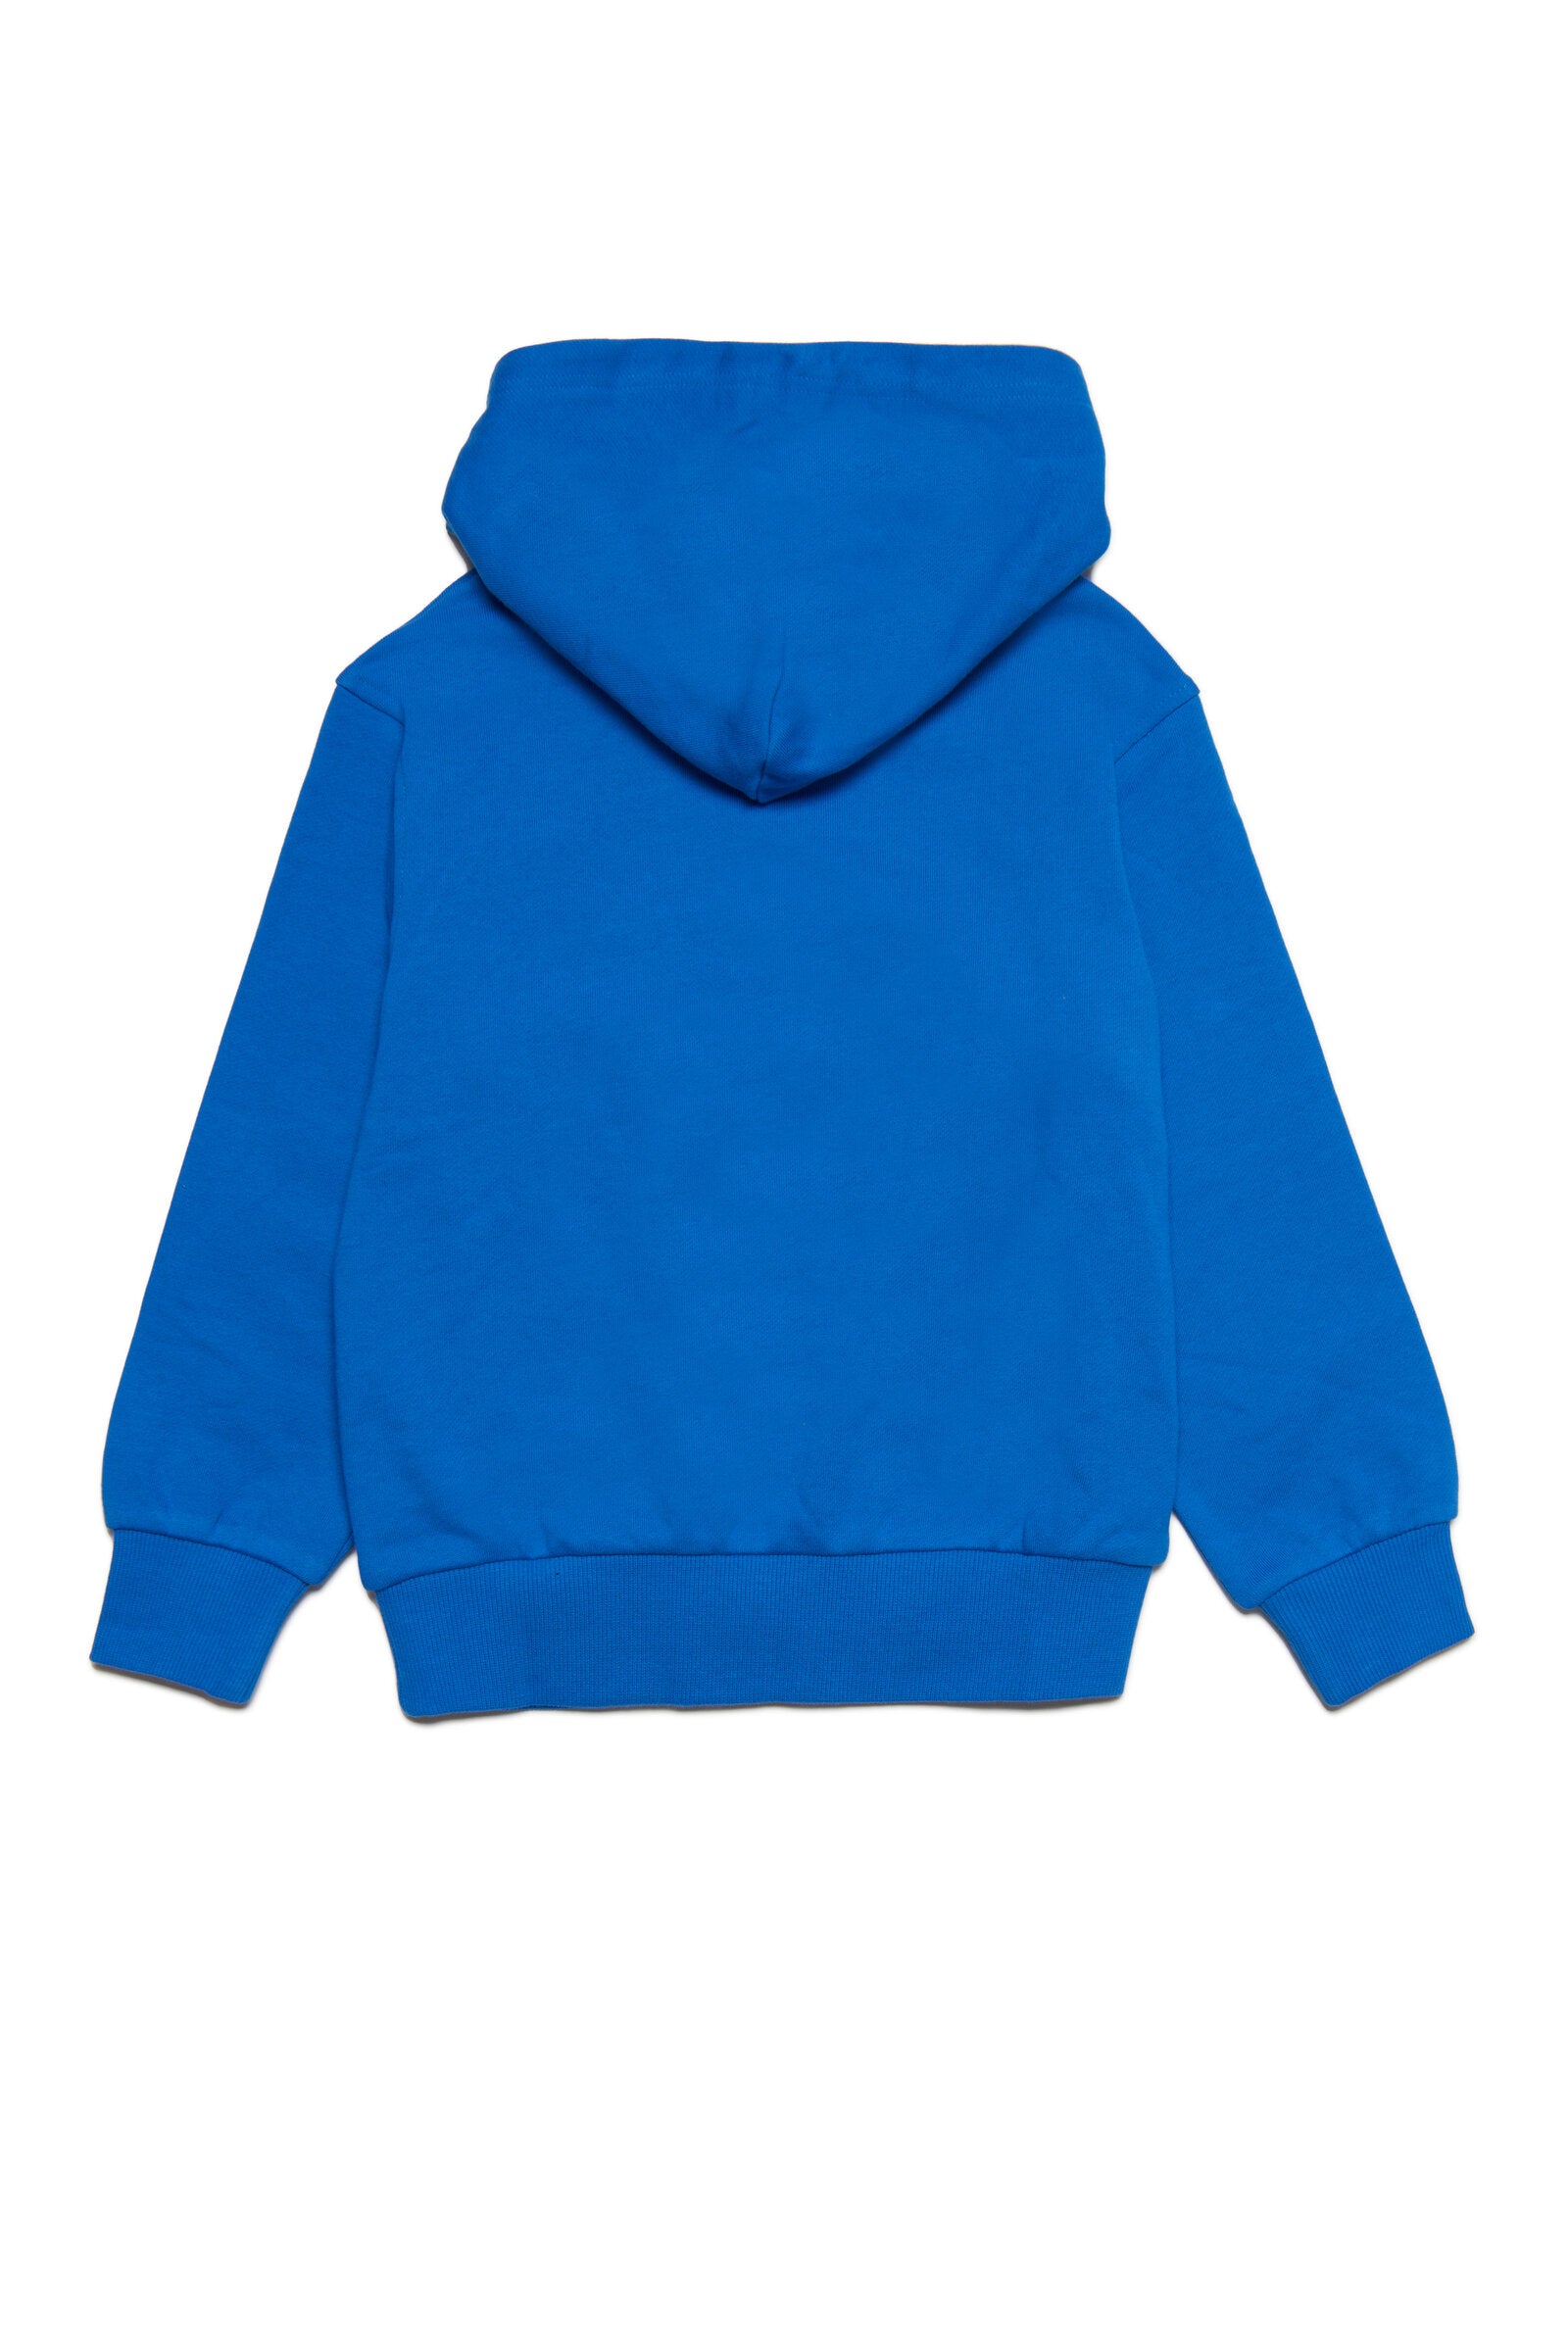 Blue hooded sweatshirt with watercolor effect logo